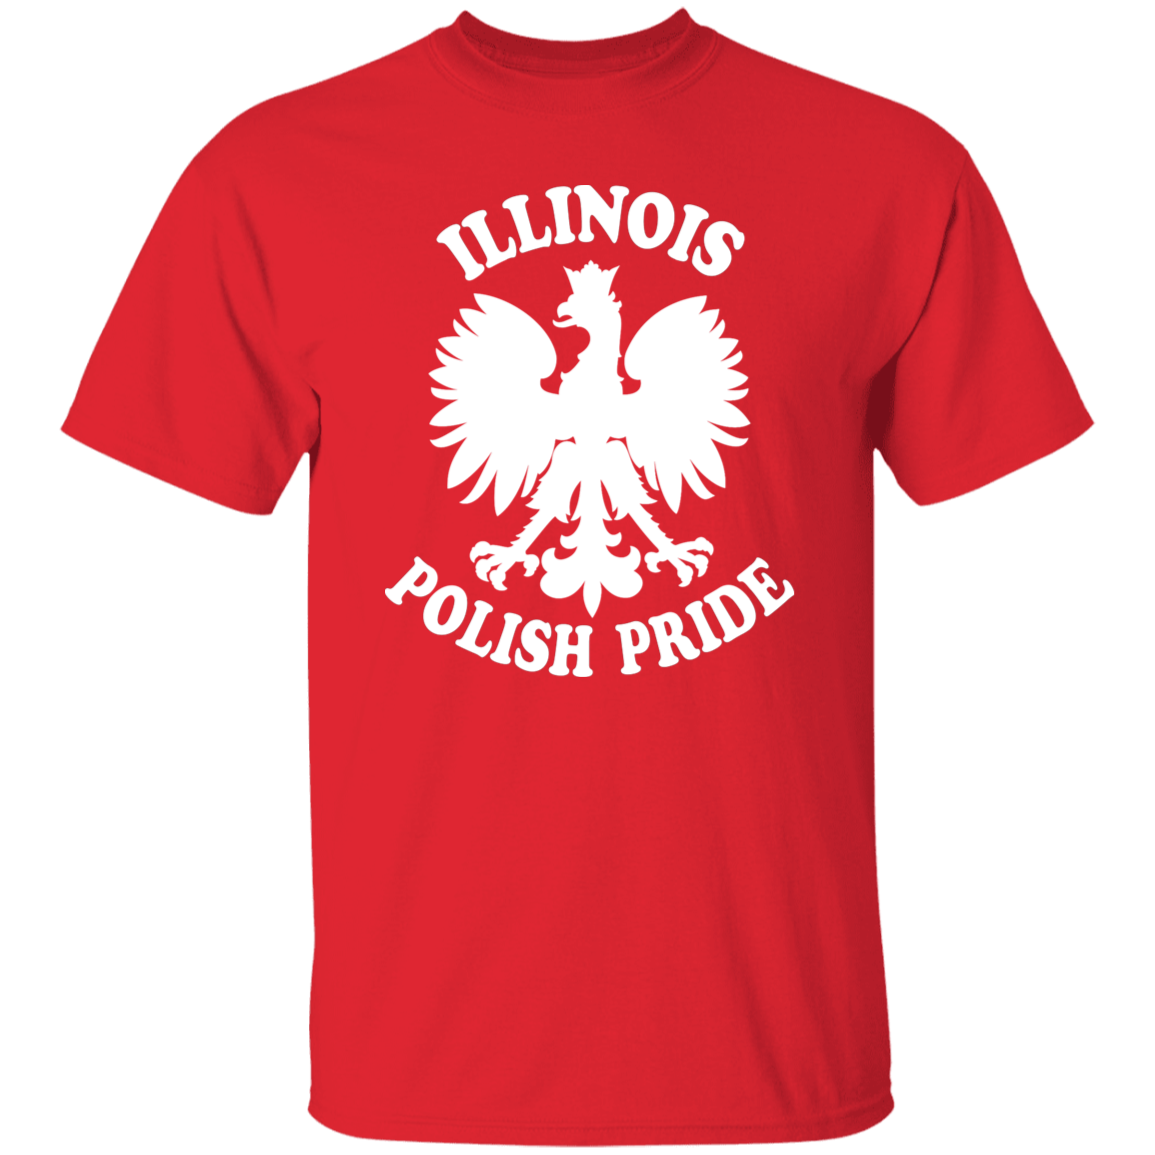 Illinois Polish Pride Apparel CustomCat G500 5.3 oz. T-Shirt Red S